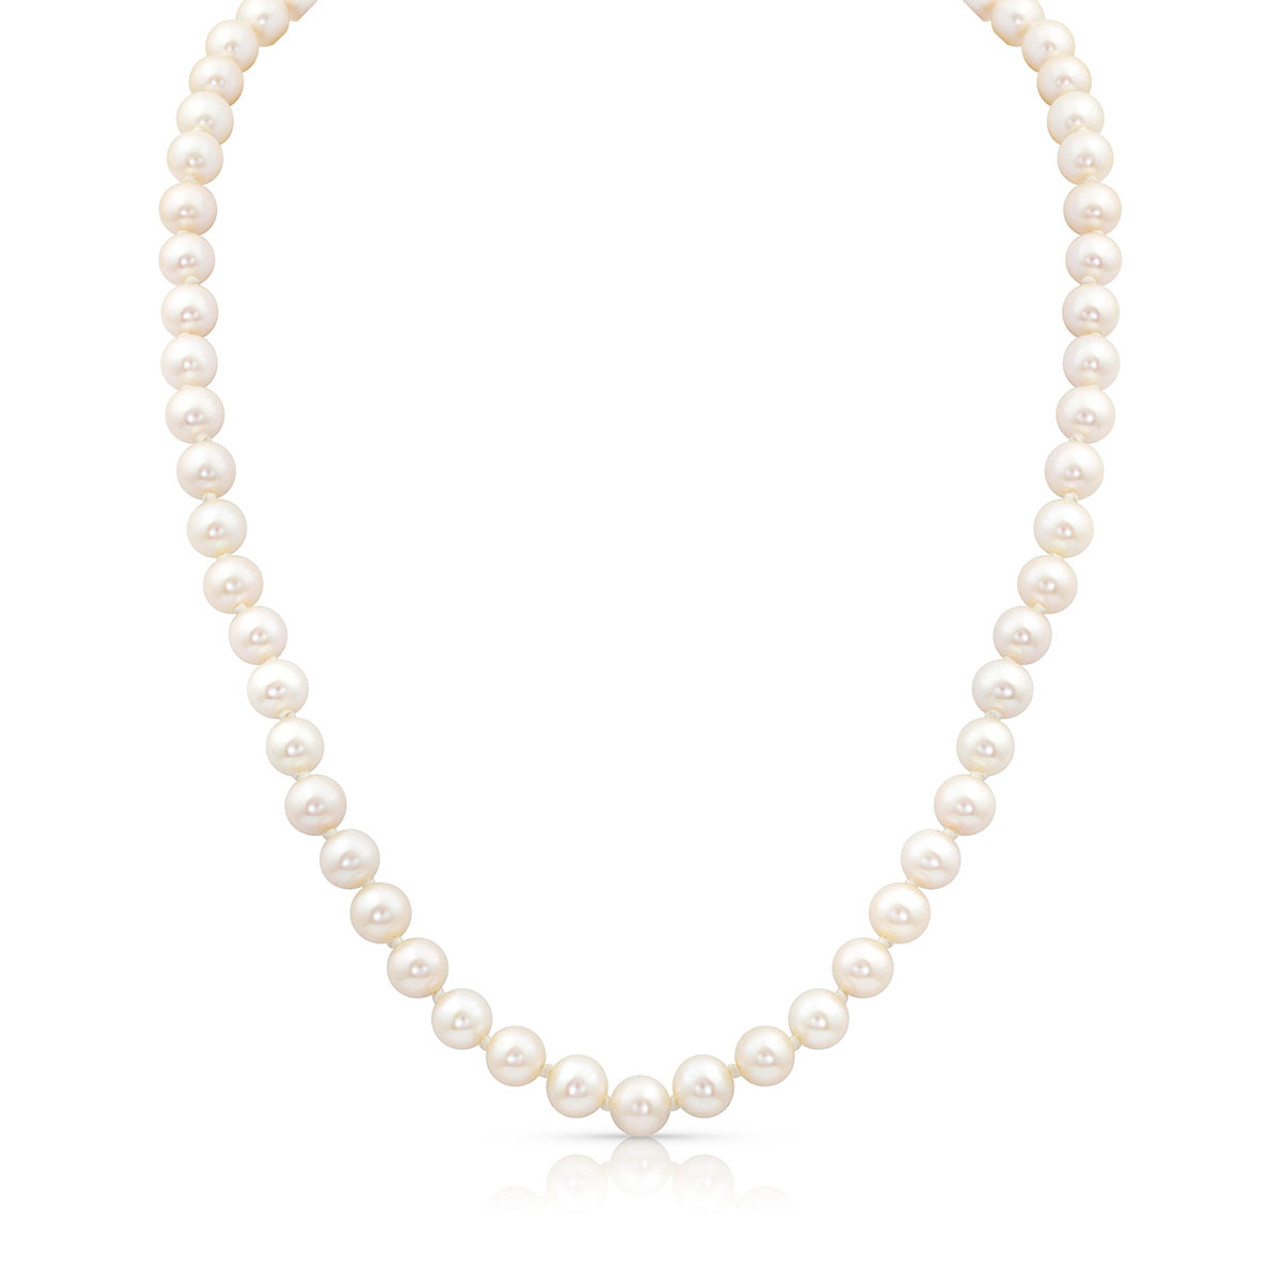  Genuine 14K Gold Pearl Filigree Necklace Clasp